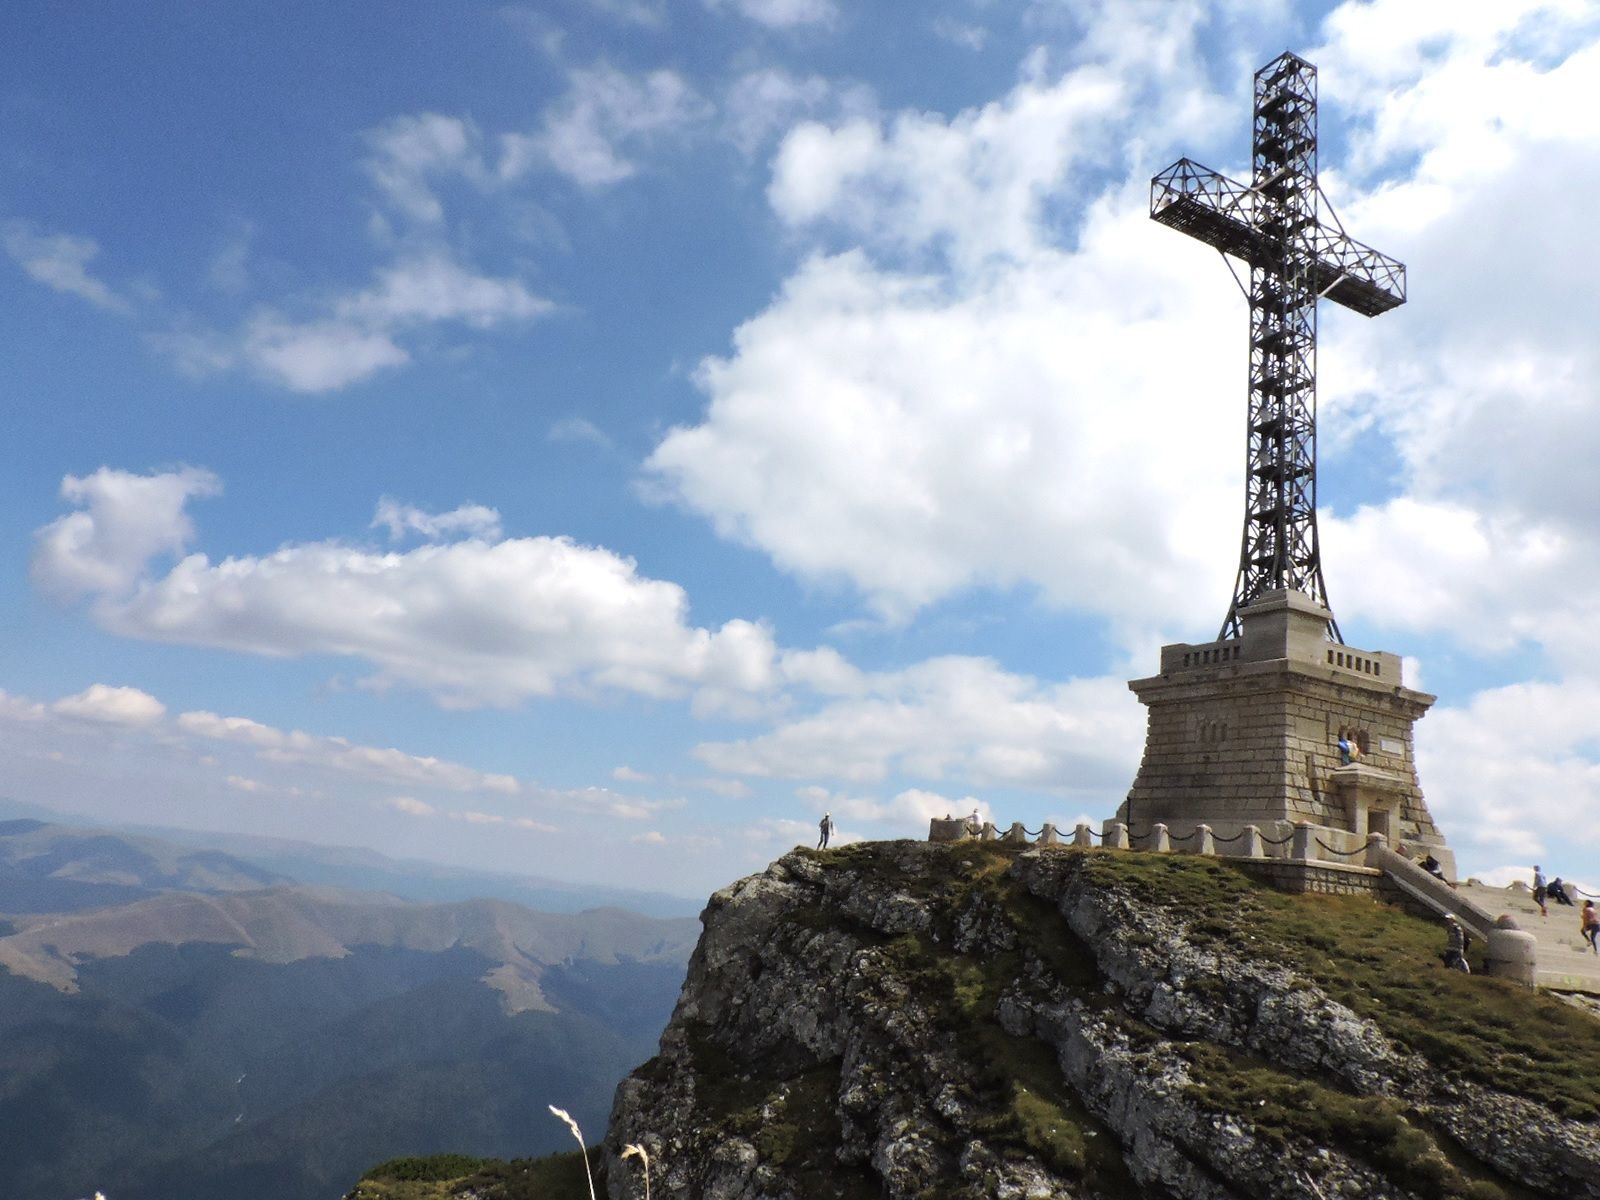 
Tallest summit cross: The Heroes' Cross on Caraiman Peak